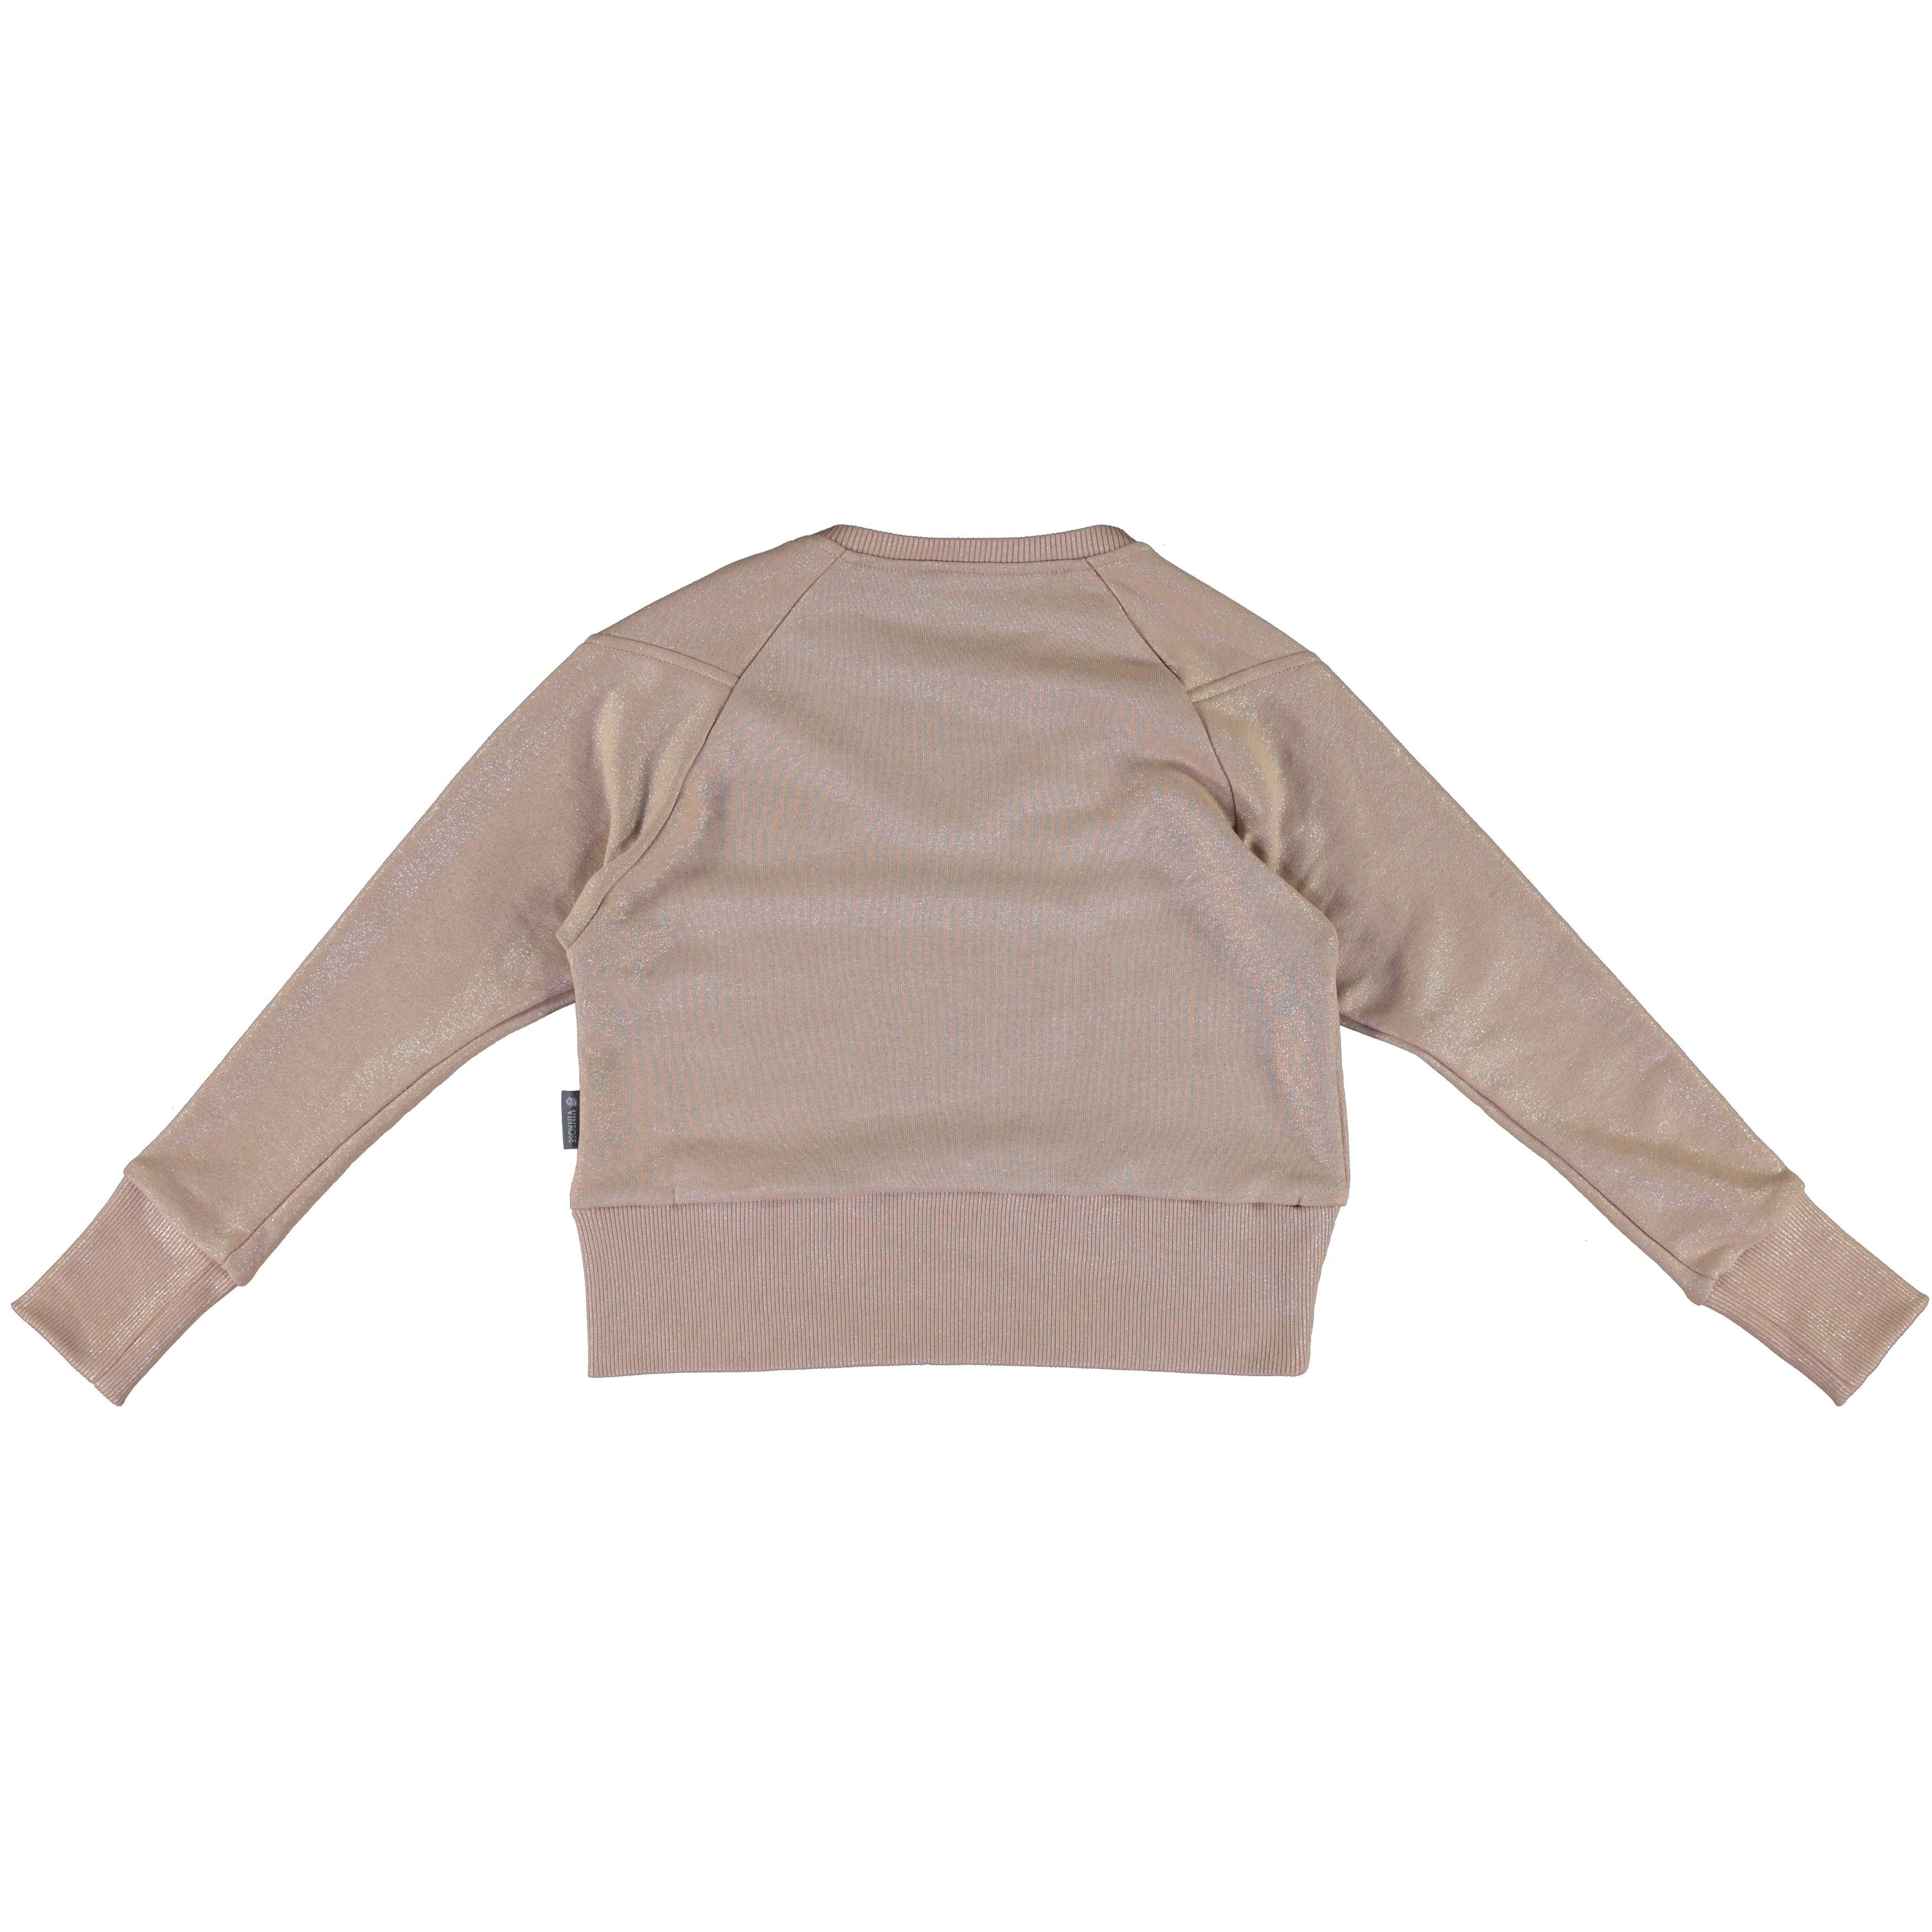 Sweater Vinrose